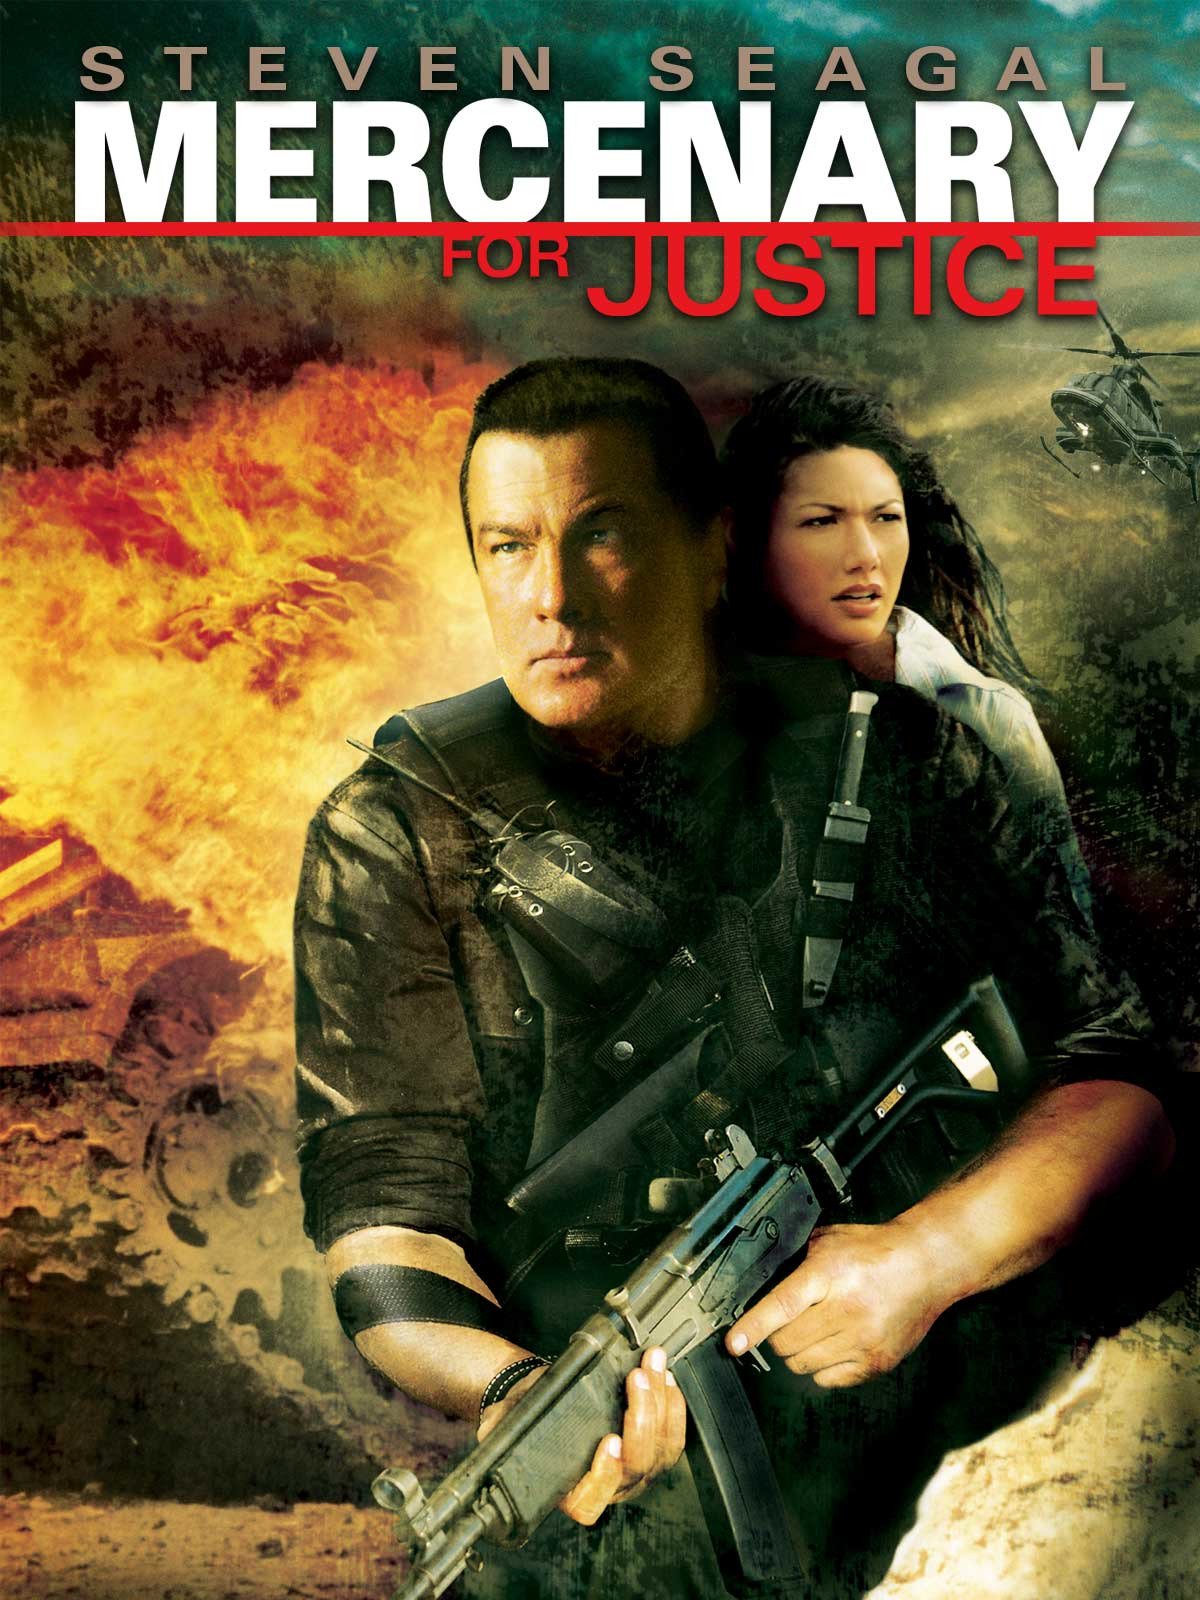 Mercenary for justice (2006)